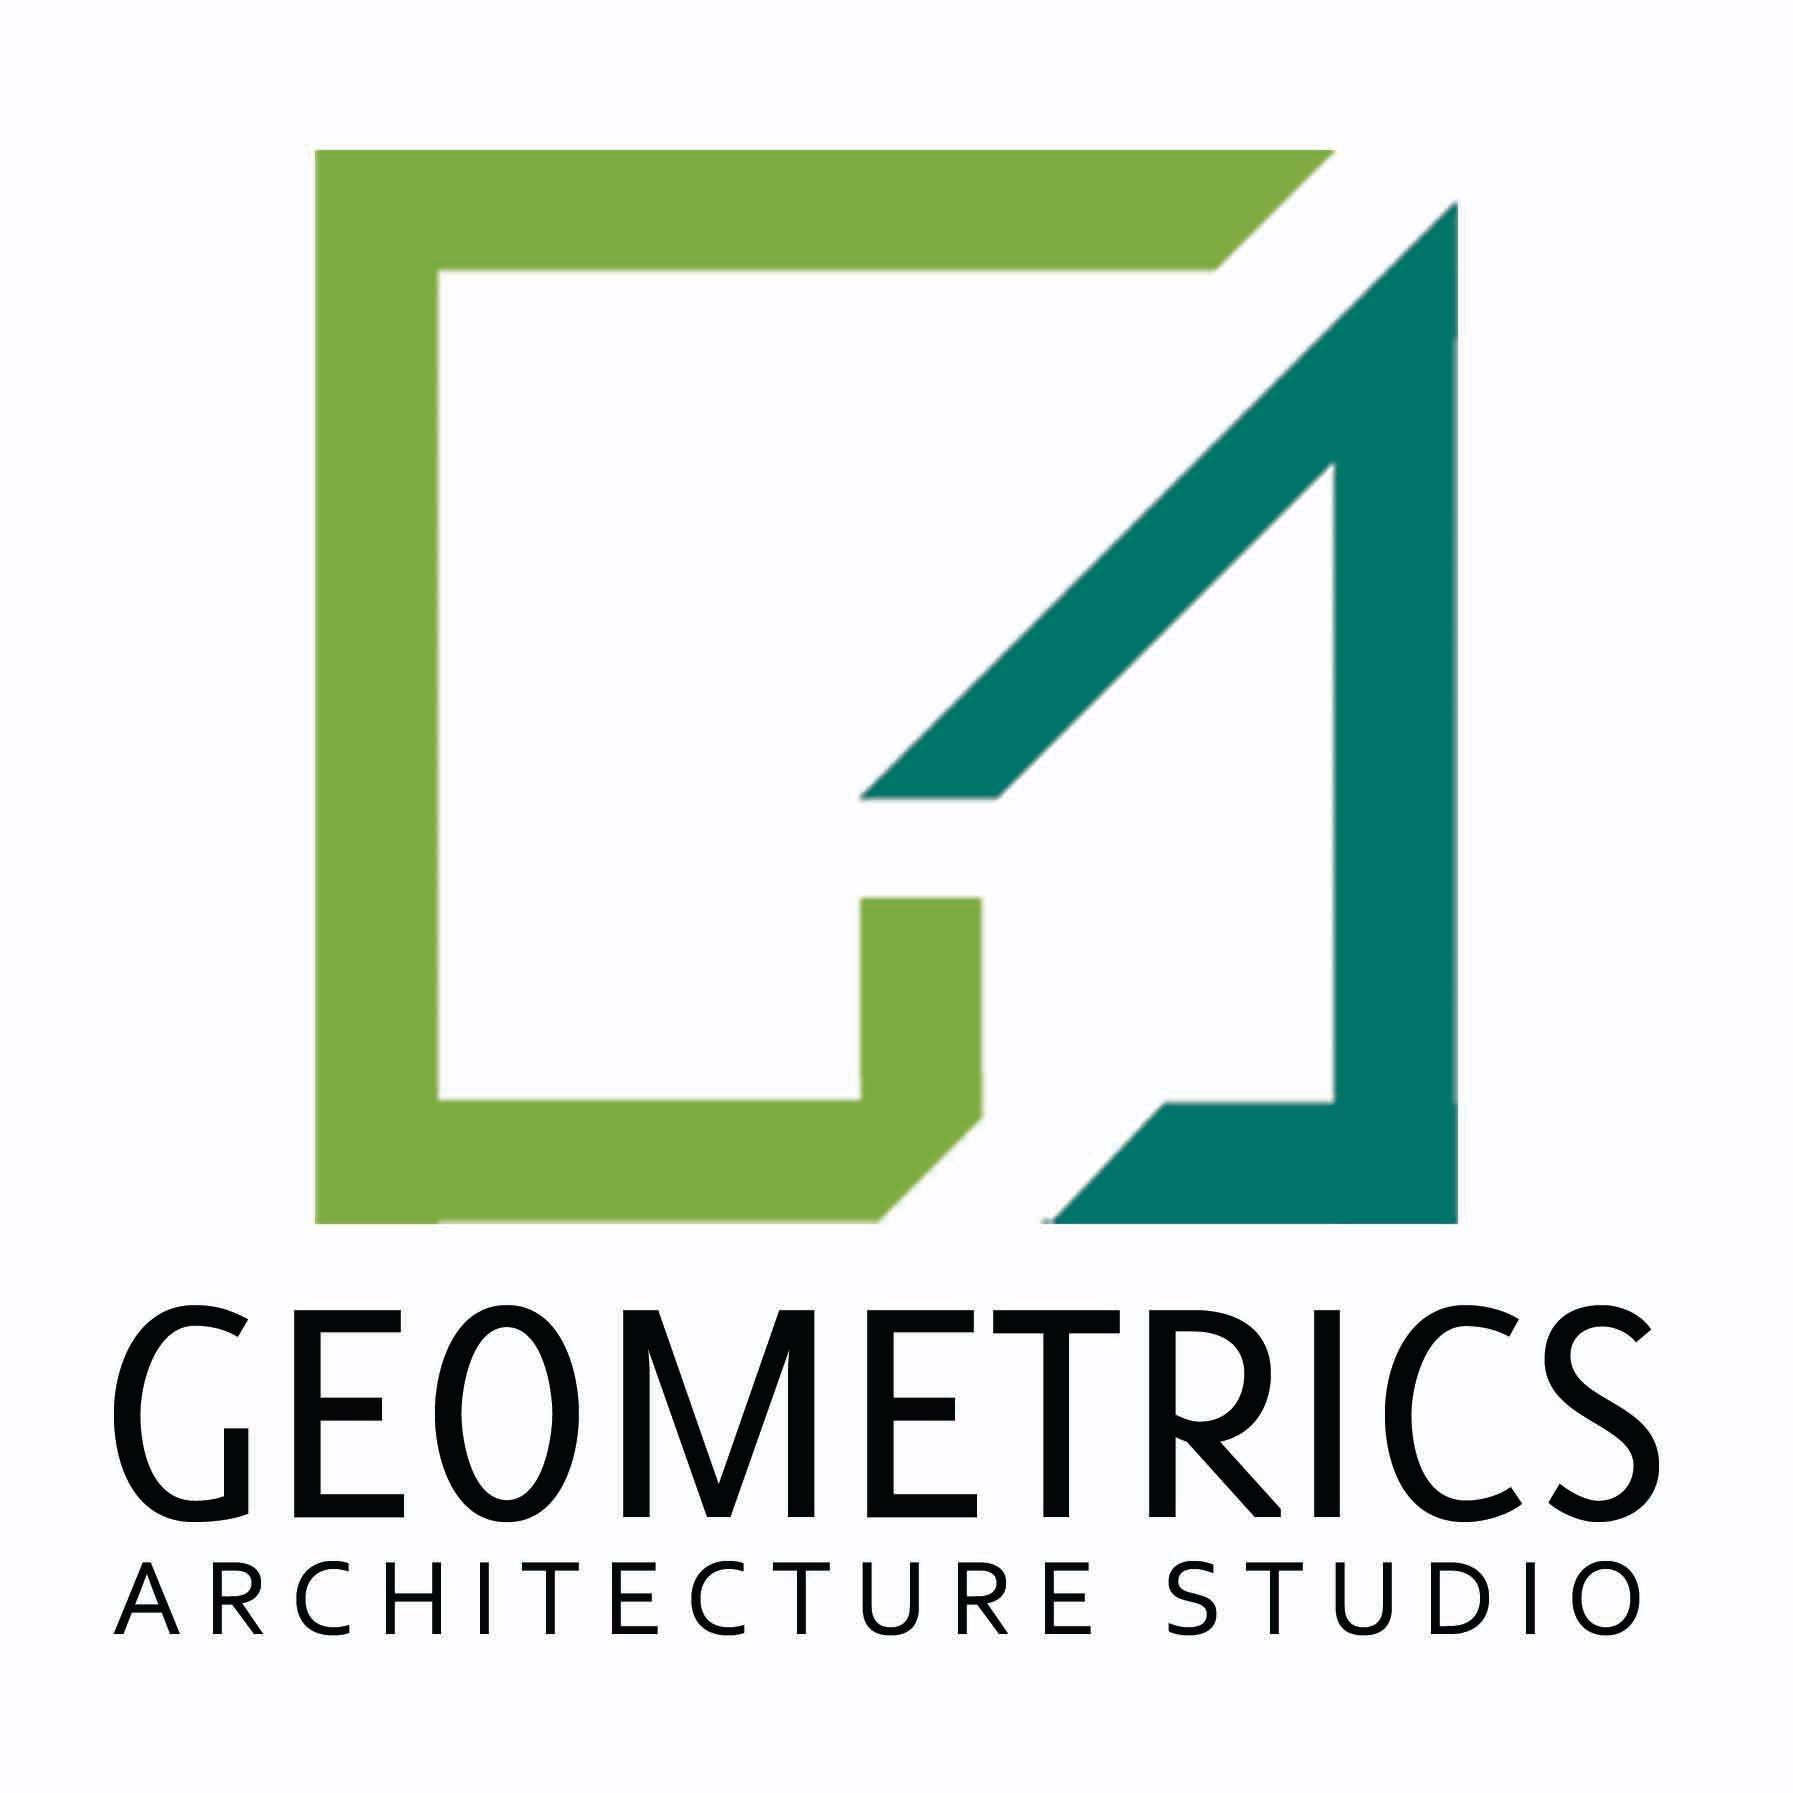 Geometrics Architecture Studio Logo